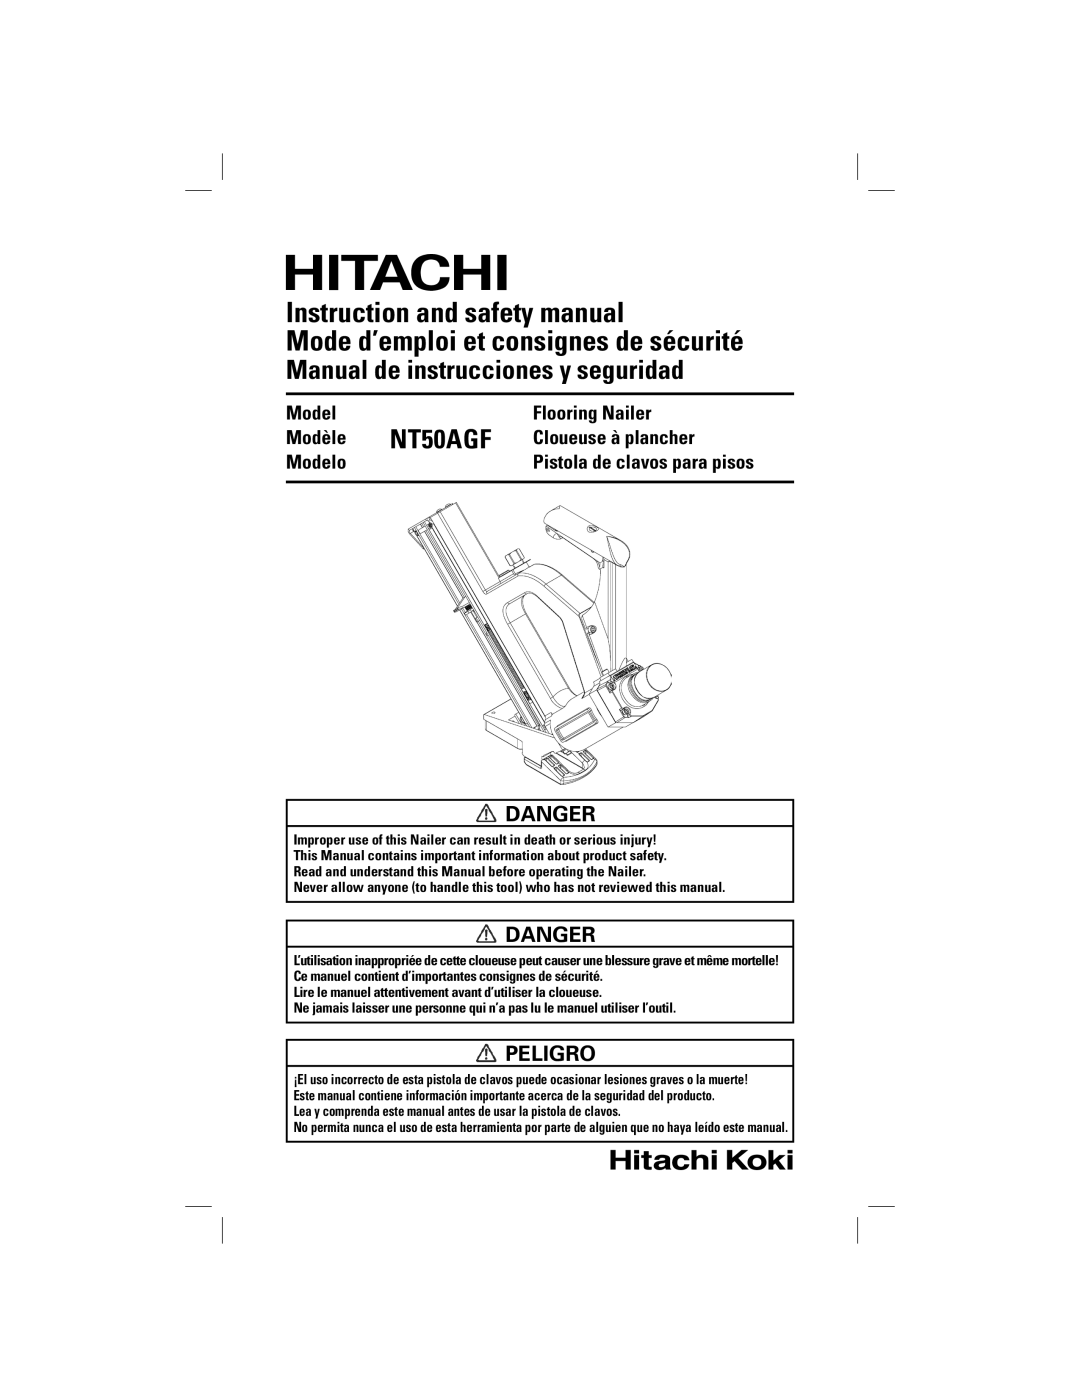 Hitachi NT50AGF manual Danger, Peligro, Flooring Nailer, Modèle, Cloueuse à plancher, Modelo 